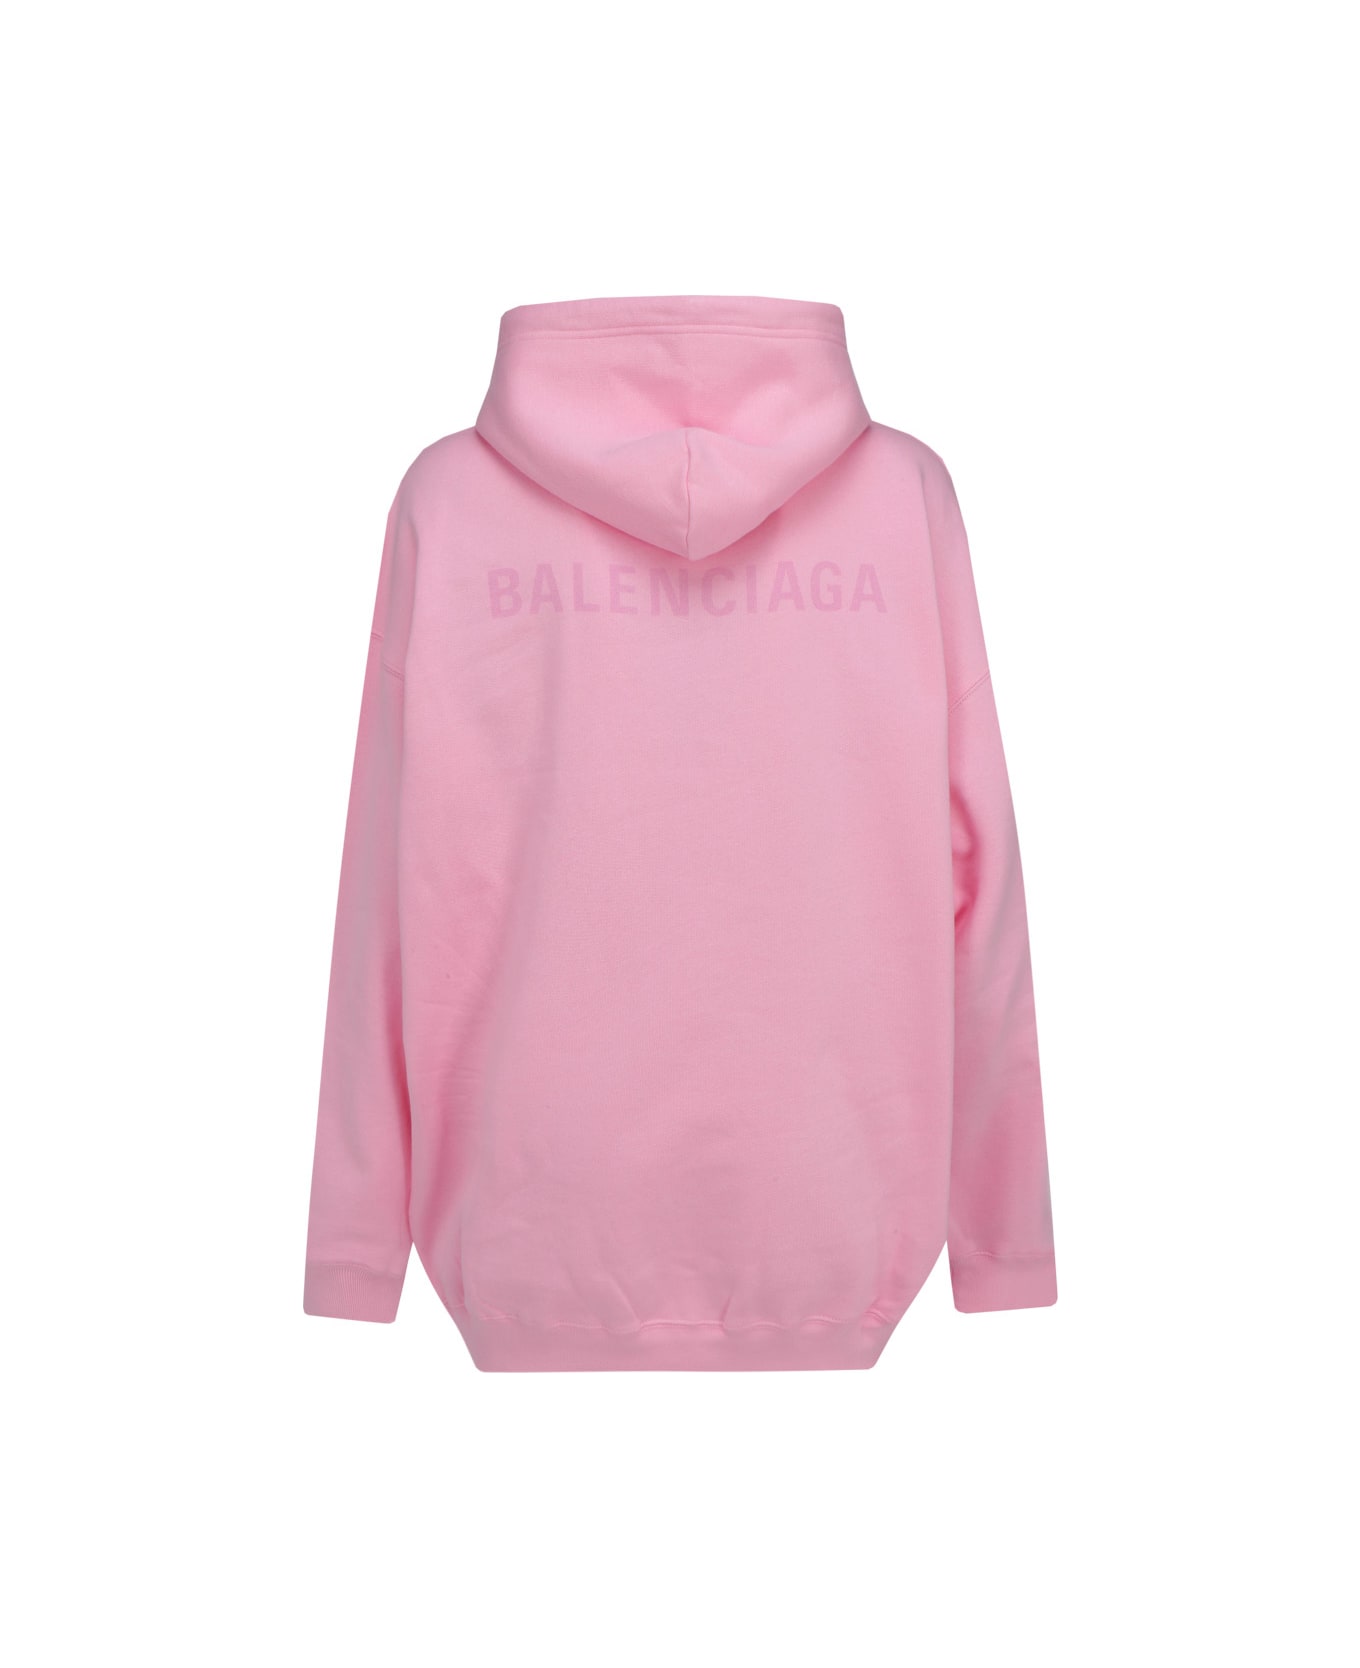 Balenciaga Hoodie - Pink